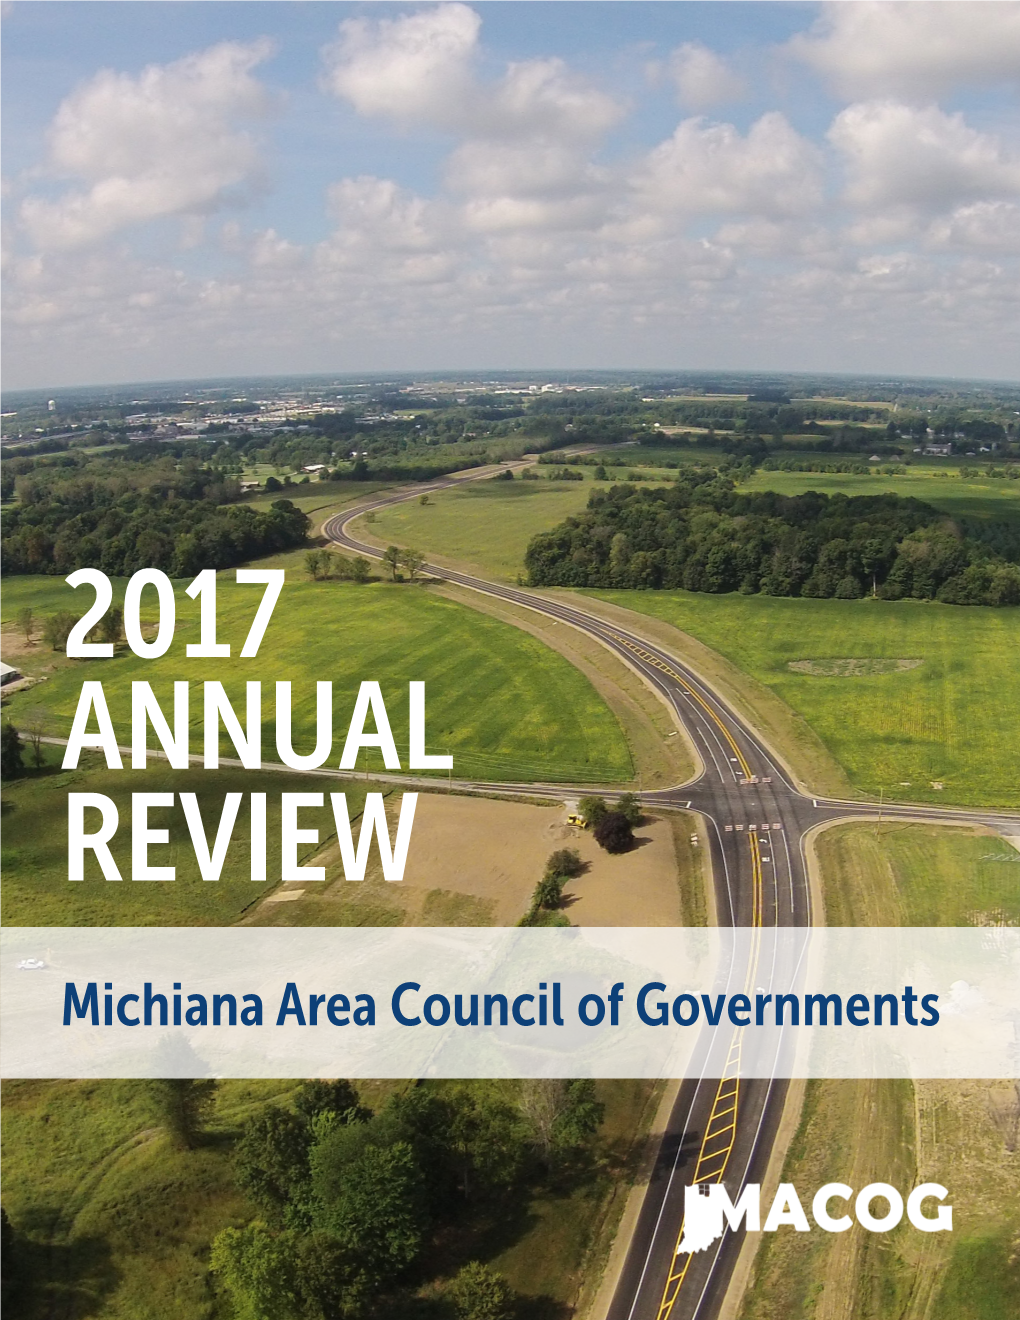 Michiana Area Council of Governments